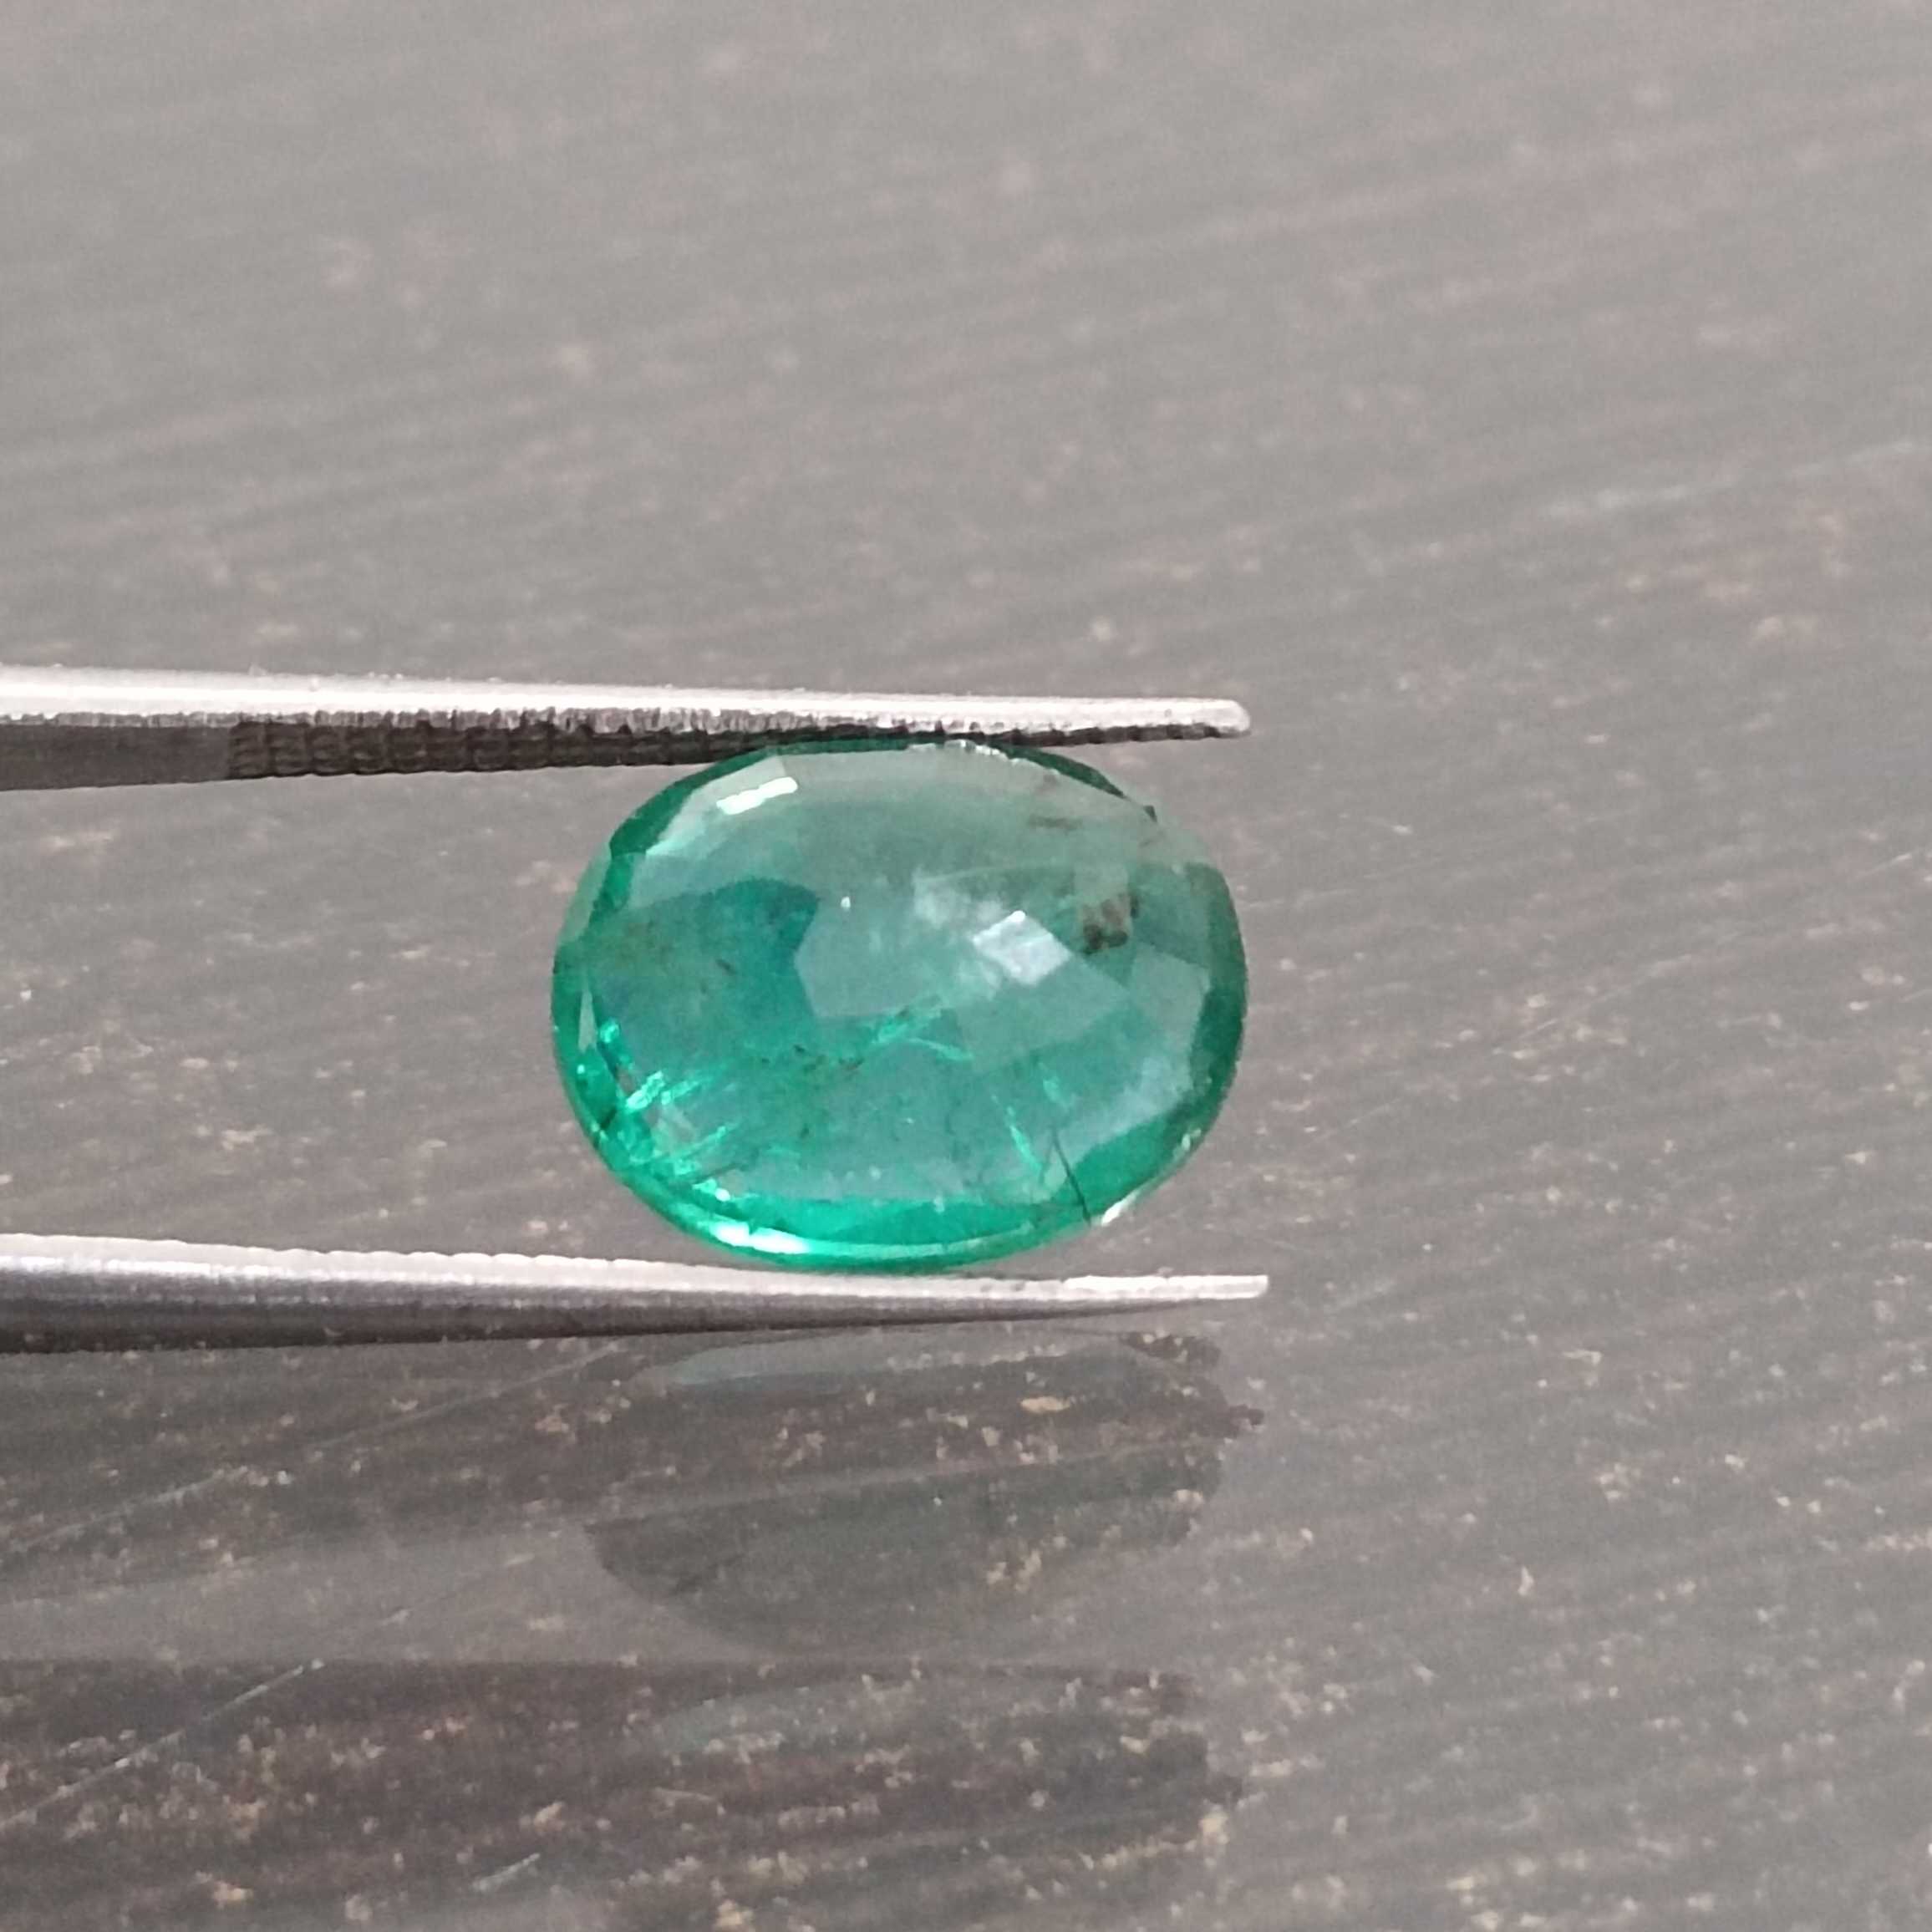 3.57ct deep shiny green oval step cut emerald